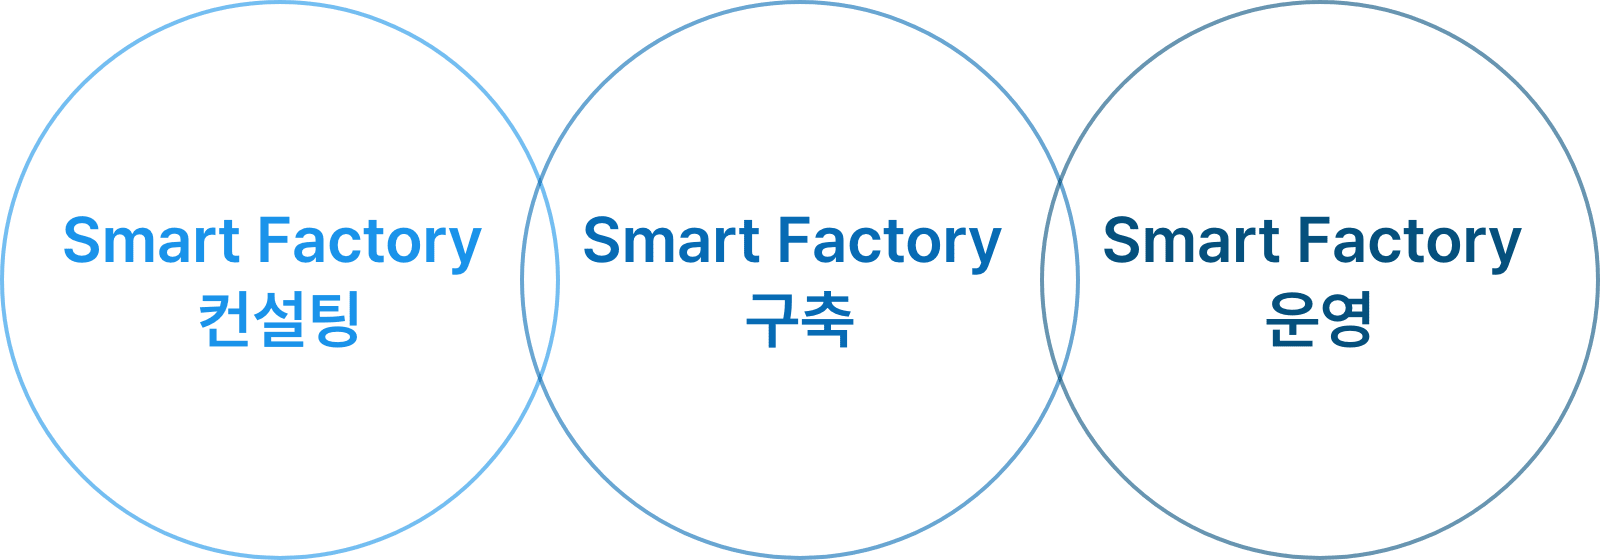 Smart Factory 컨설팅, Smart Factory 구축, Smart Factory 운영